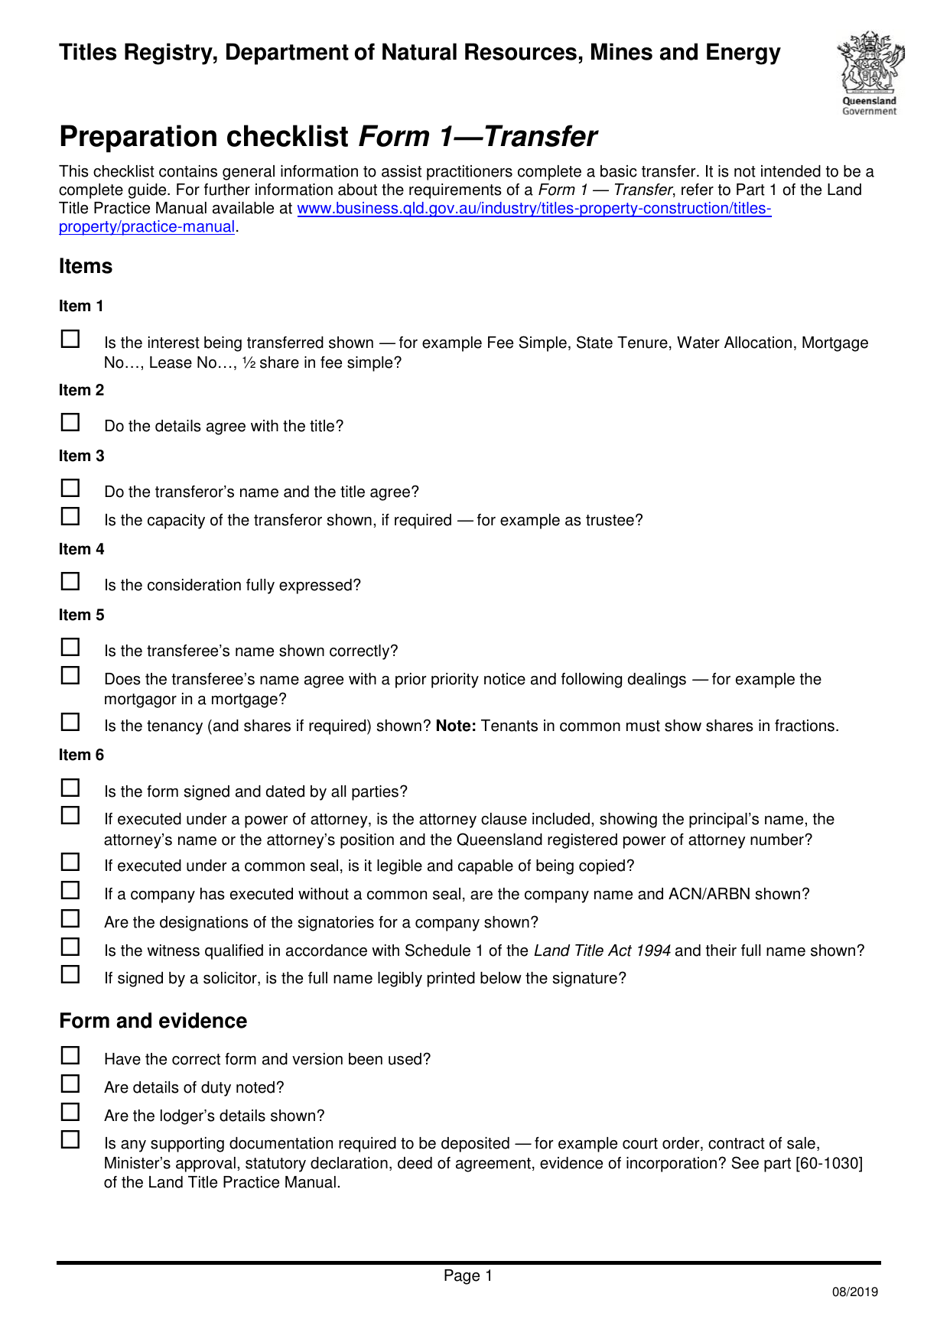 Form 1 Preparation Checklist -transfer - Queensland, Australia, Page 1